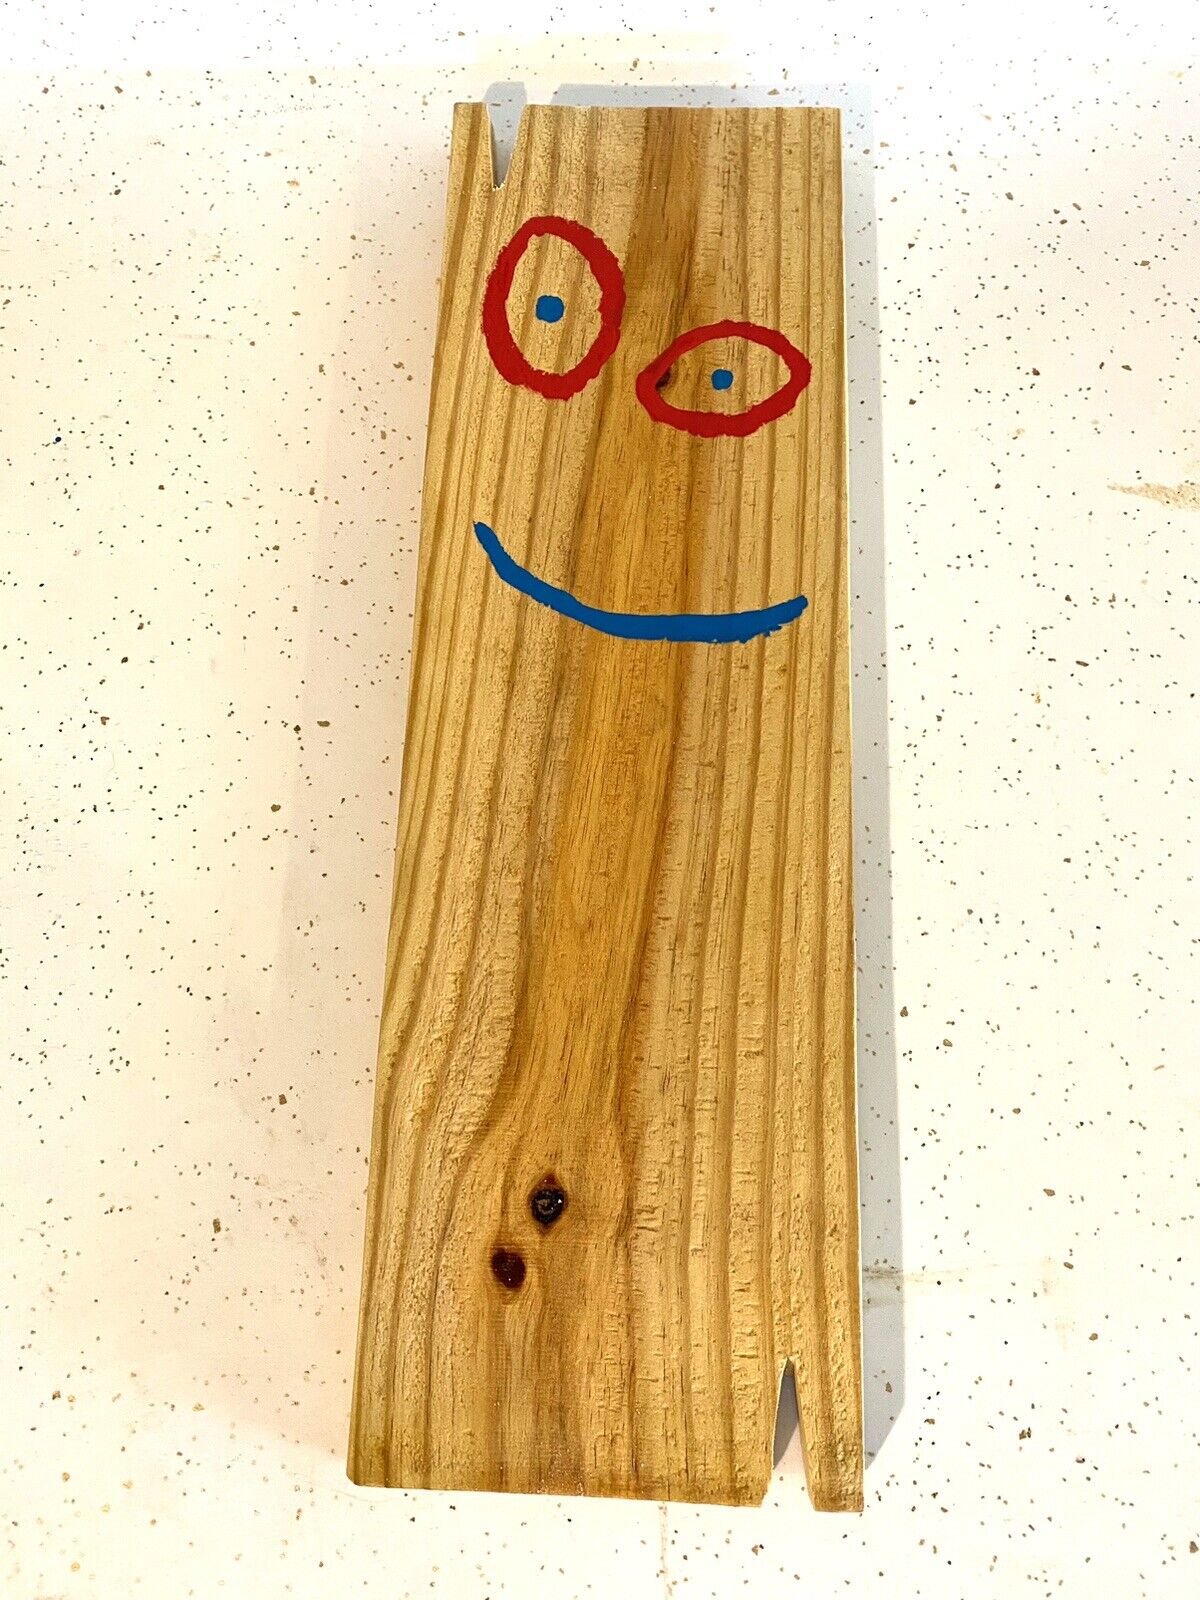 Ed Edd n Eddy - Johnnys Plank - Real Wood - Hand Painted, Sanded, And Sealed